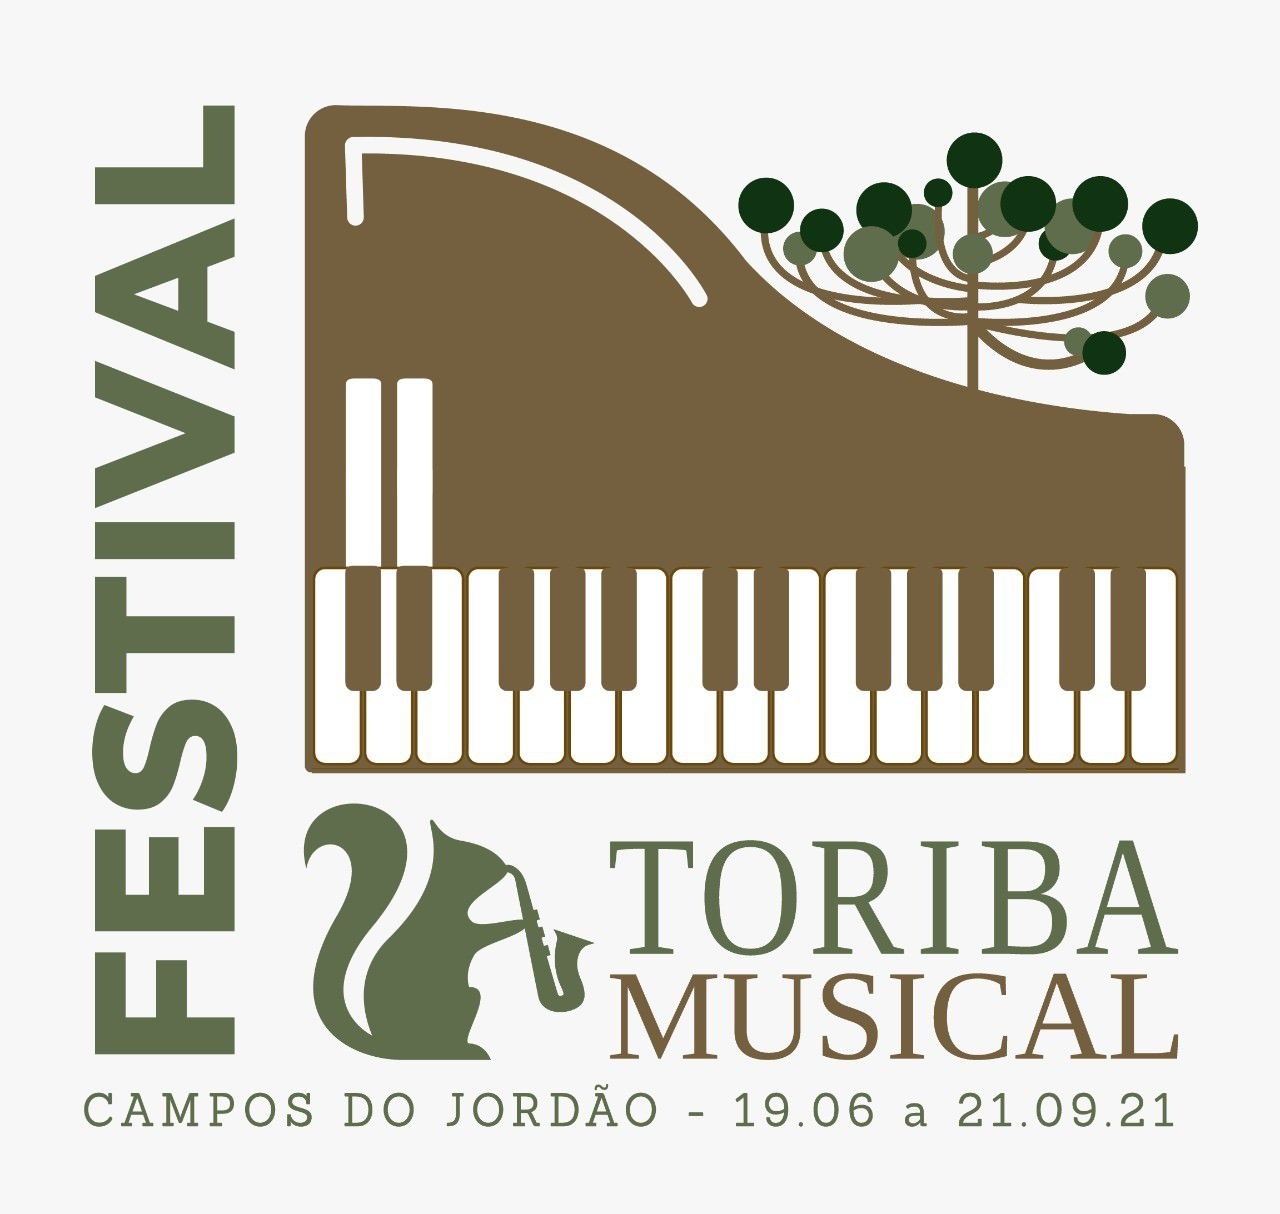 Festival Toriba Musical 2021, bientôt. Divulgation.